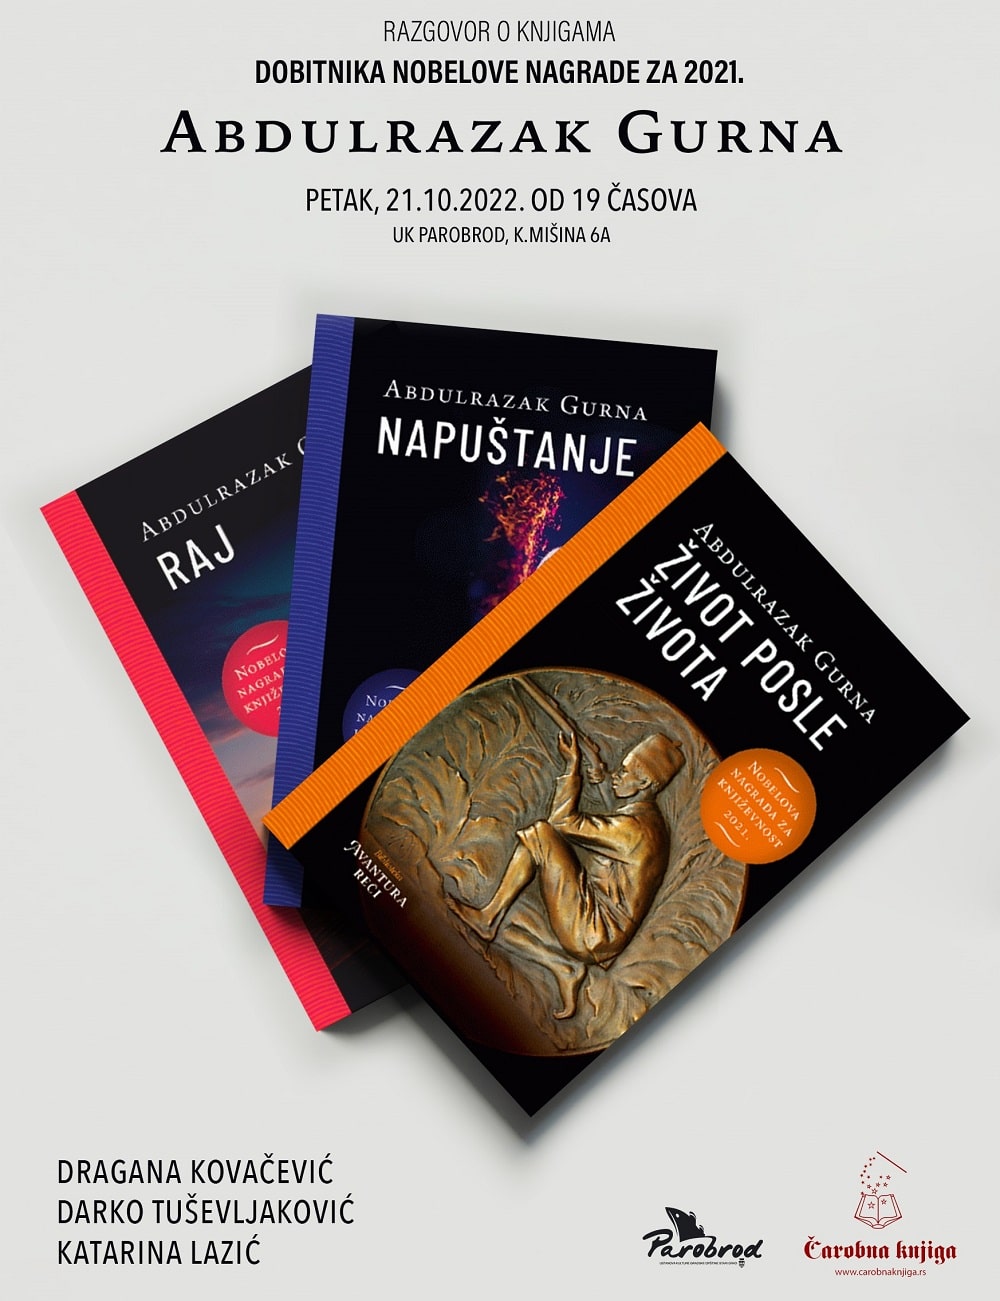 Razgovor o knjigama dobitnika Nobelove nagrade za 2021. Abdulrazaka Gurne 2